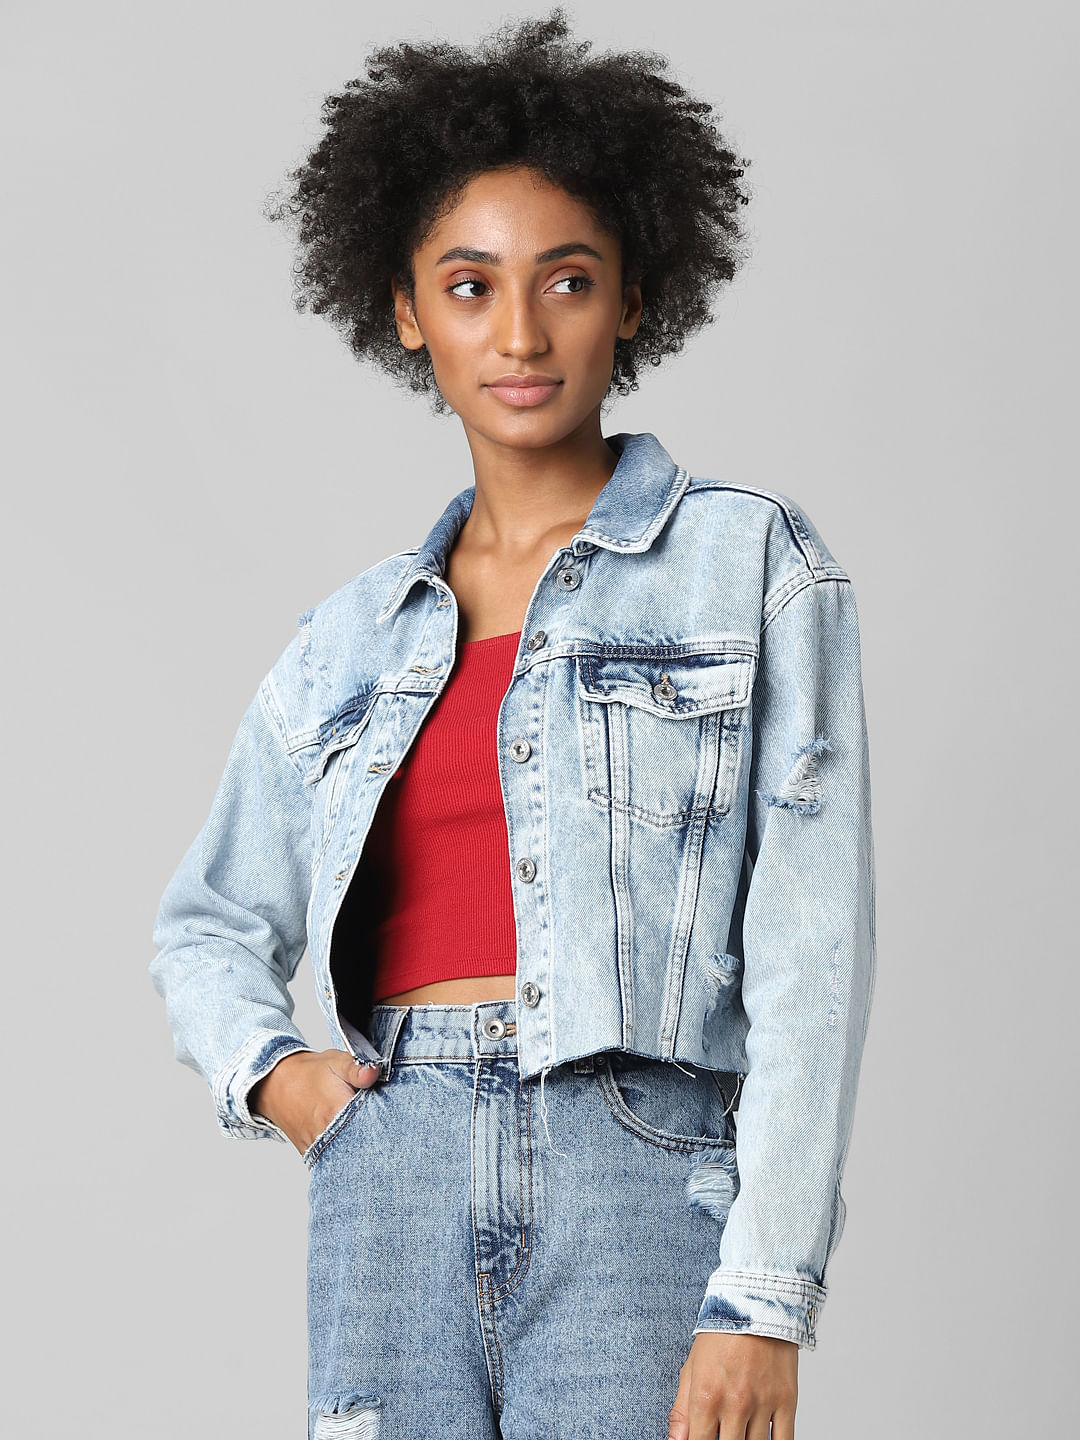 Best Jean Jackets for Women  Denim Jackets to Wear This Fall